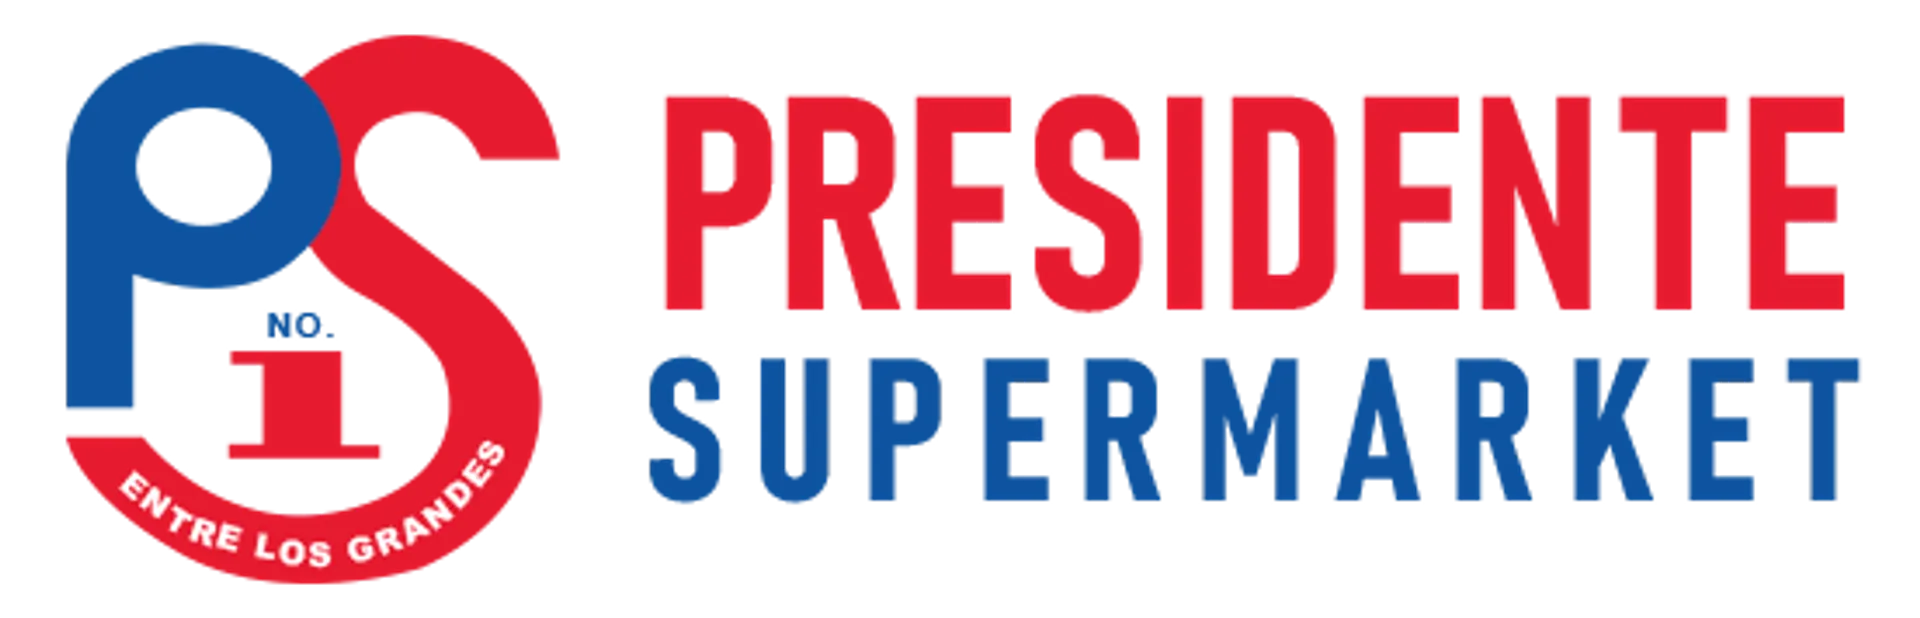 PRESIDENTE SUPERMARKET logo de catálogo